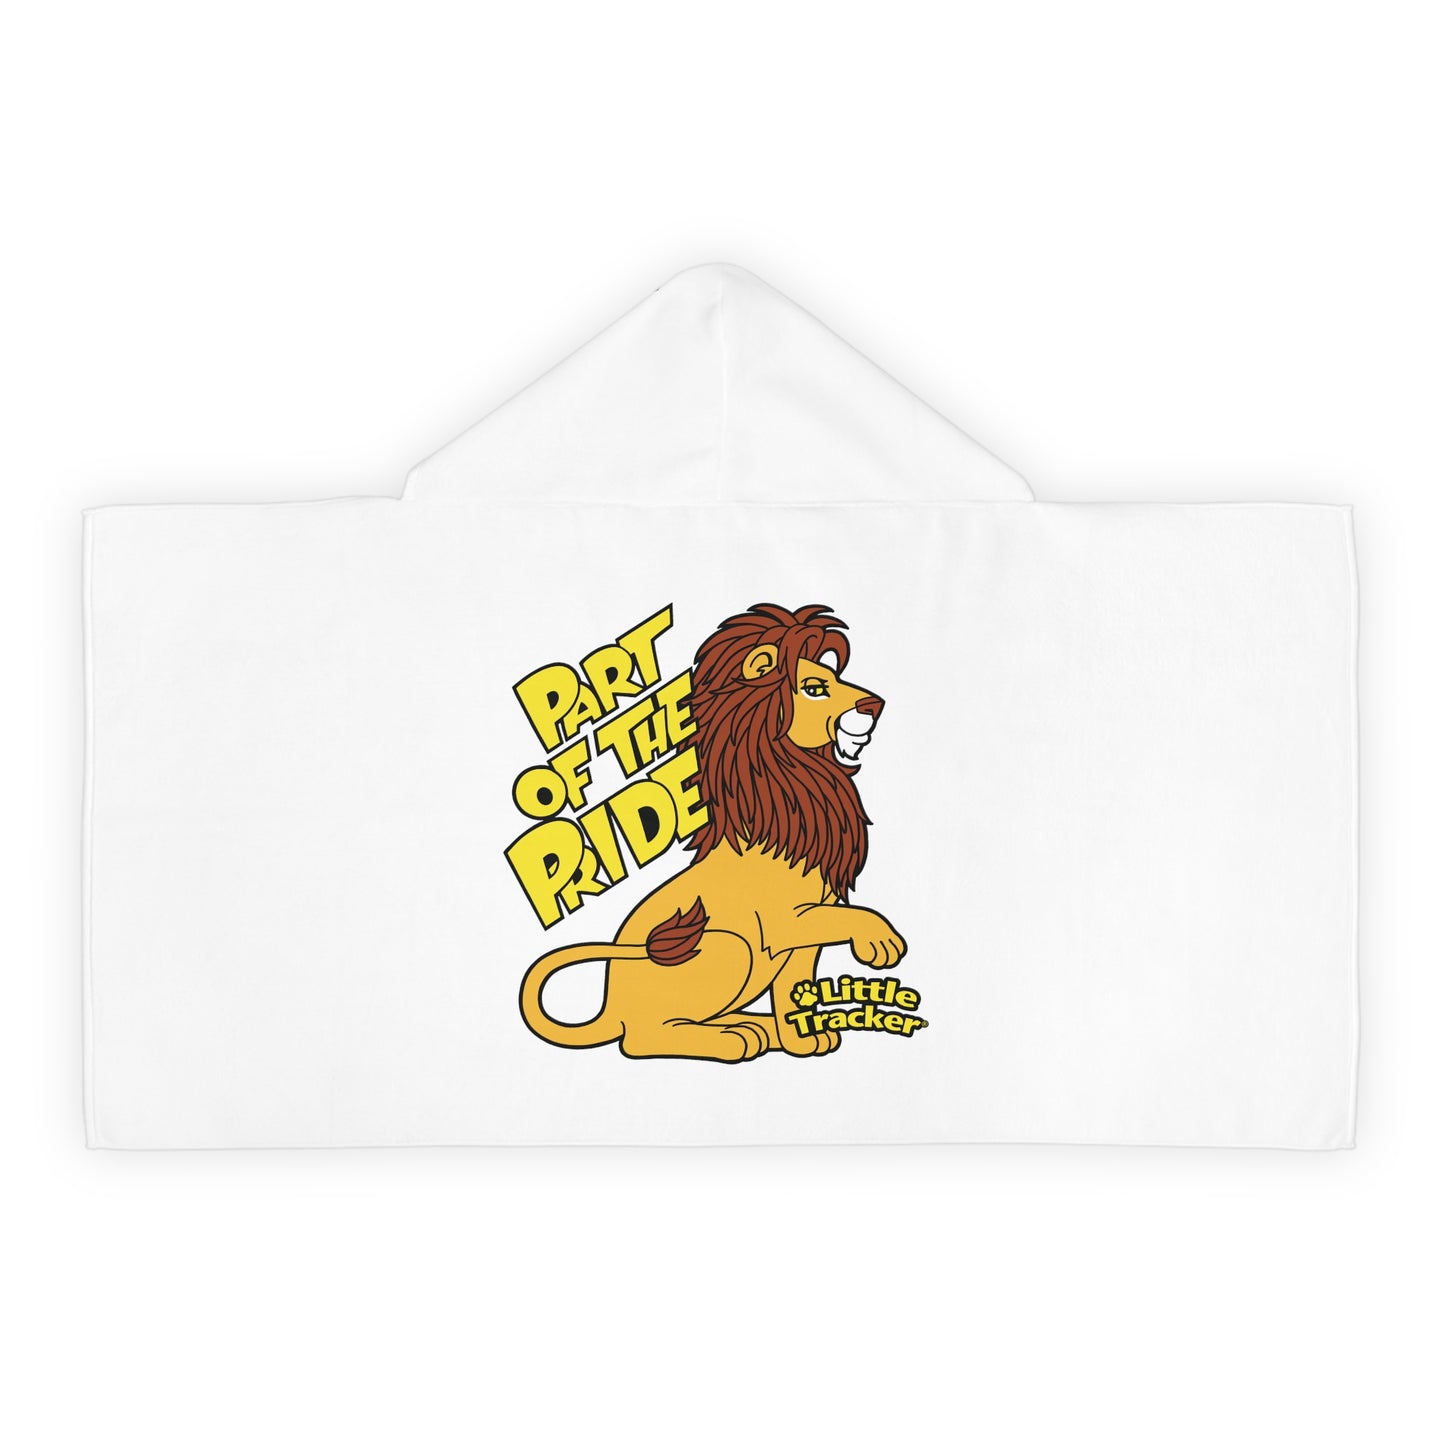 Little Tracker® Lion Youth Hooded Towel/Safari Series